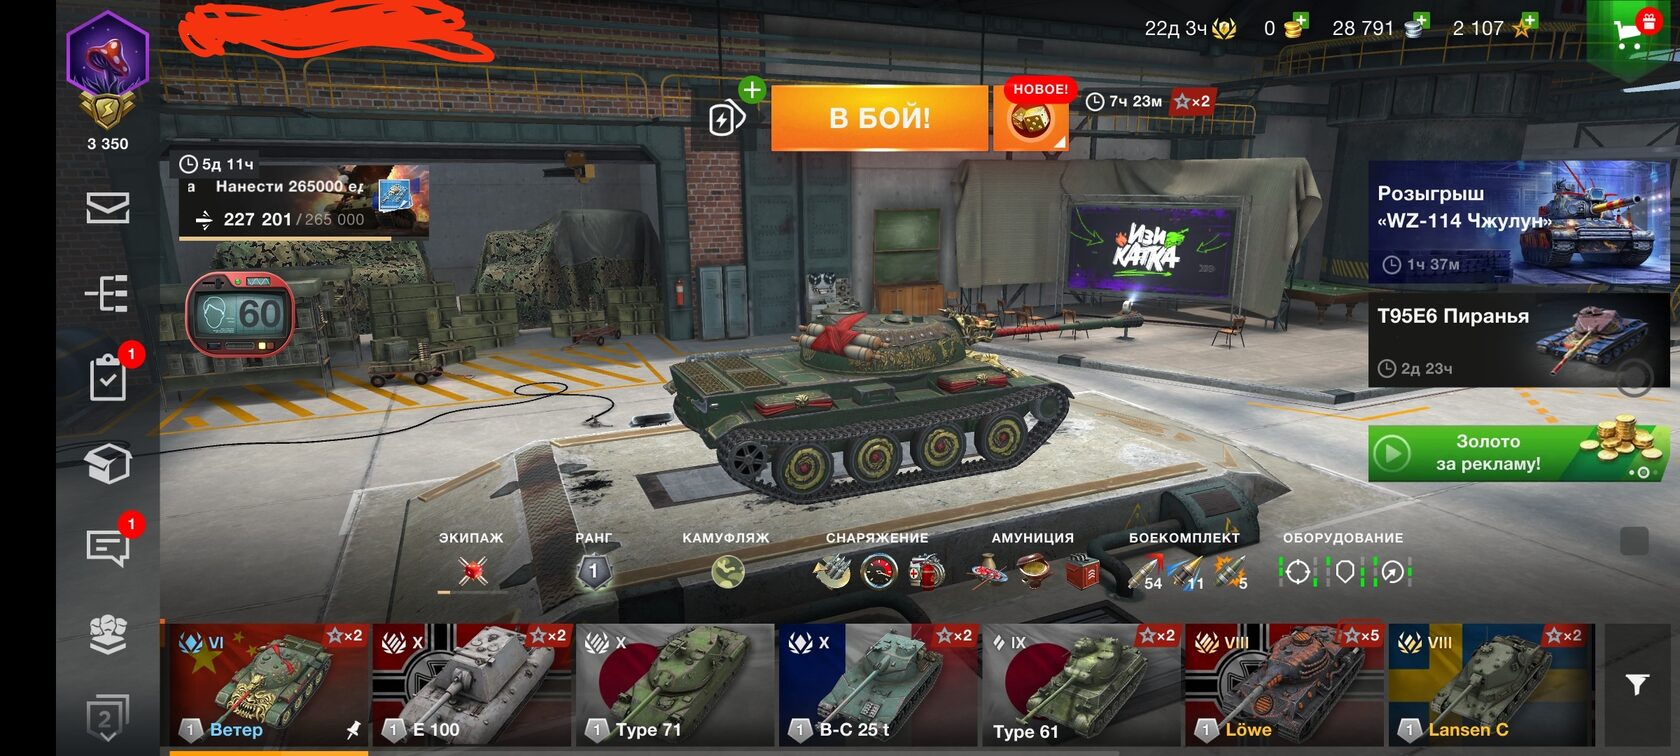 Продажа аккаунтов world of tanks blitz в телеграмме фото 89